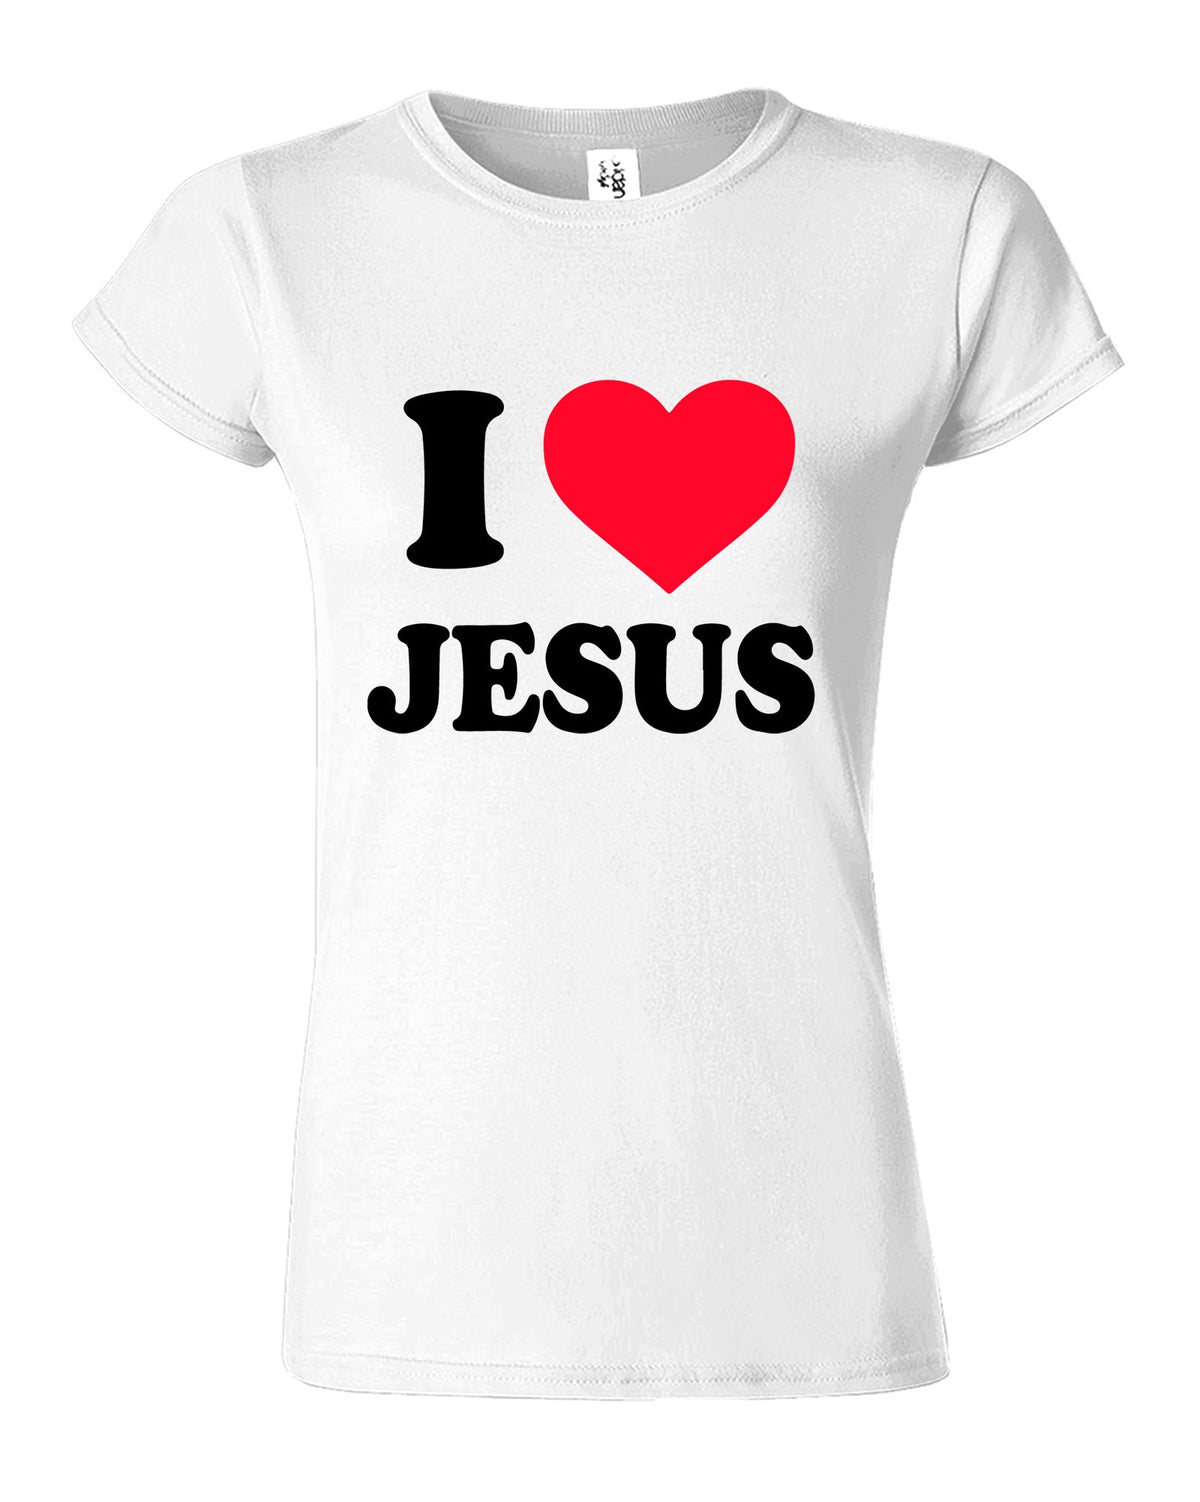 I Love jesus Womens T-Shirt